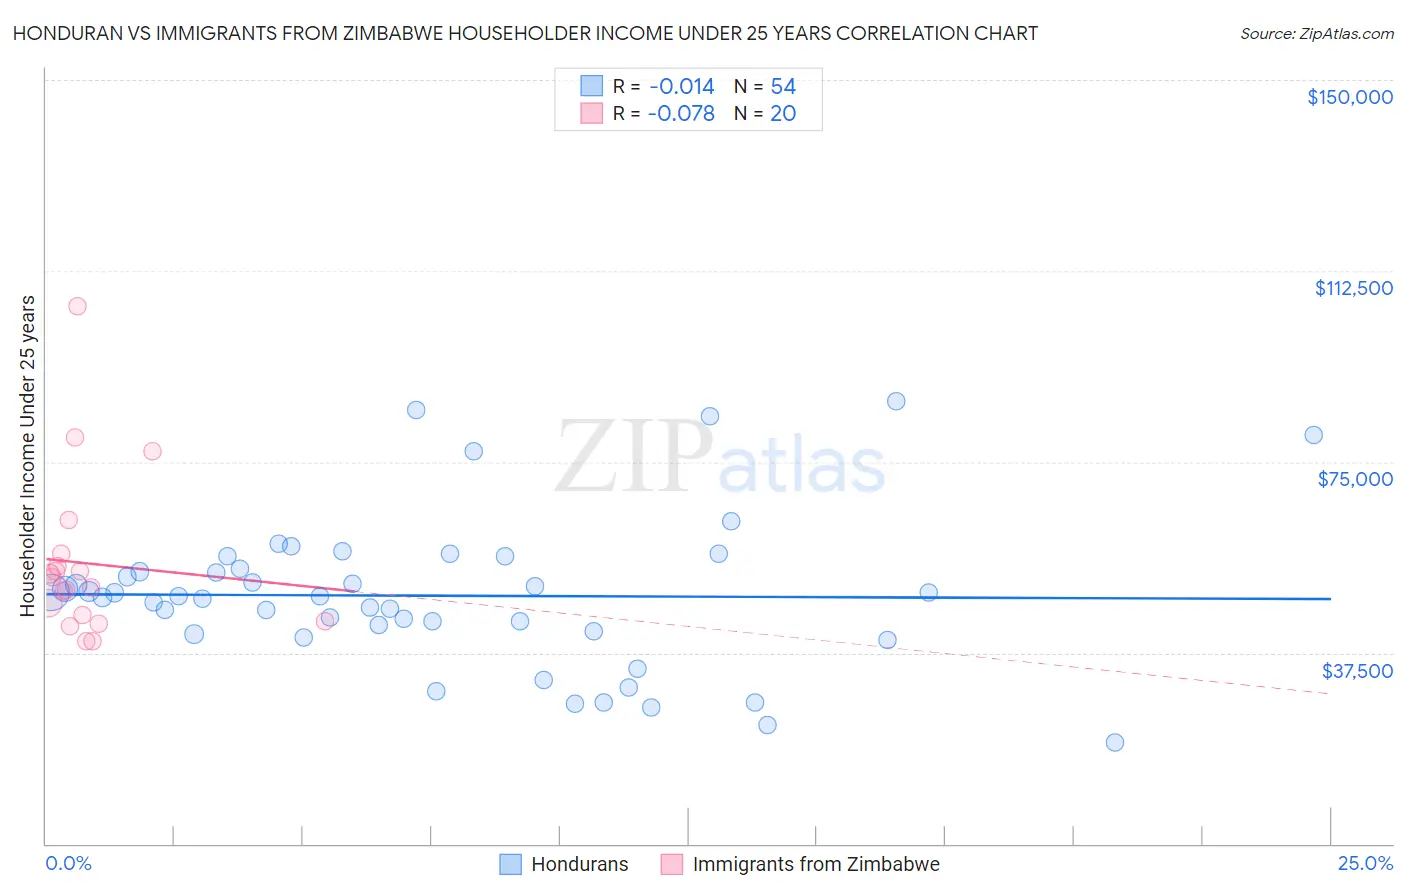 Honduran vs Immigrants from Zimbabwe Householder Income Under 25 years